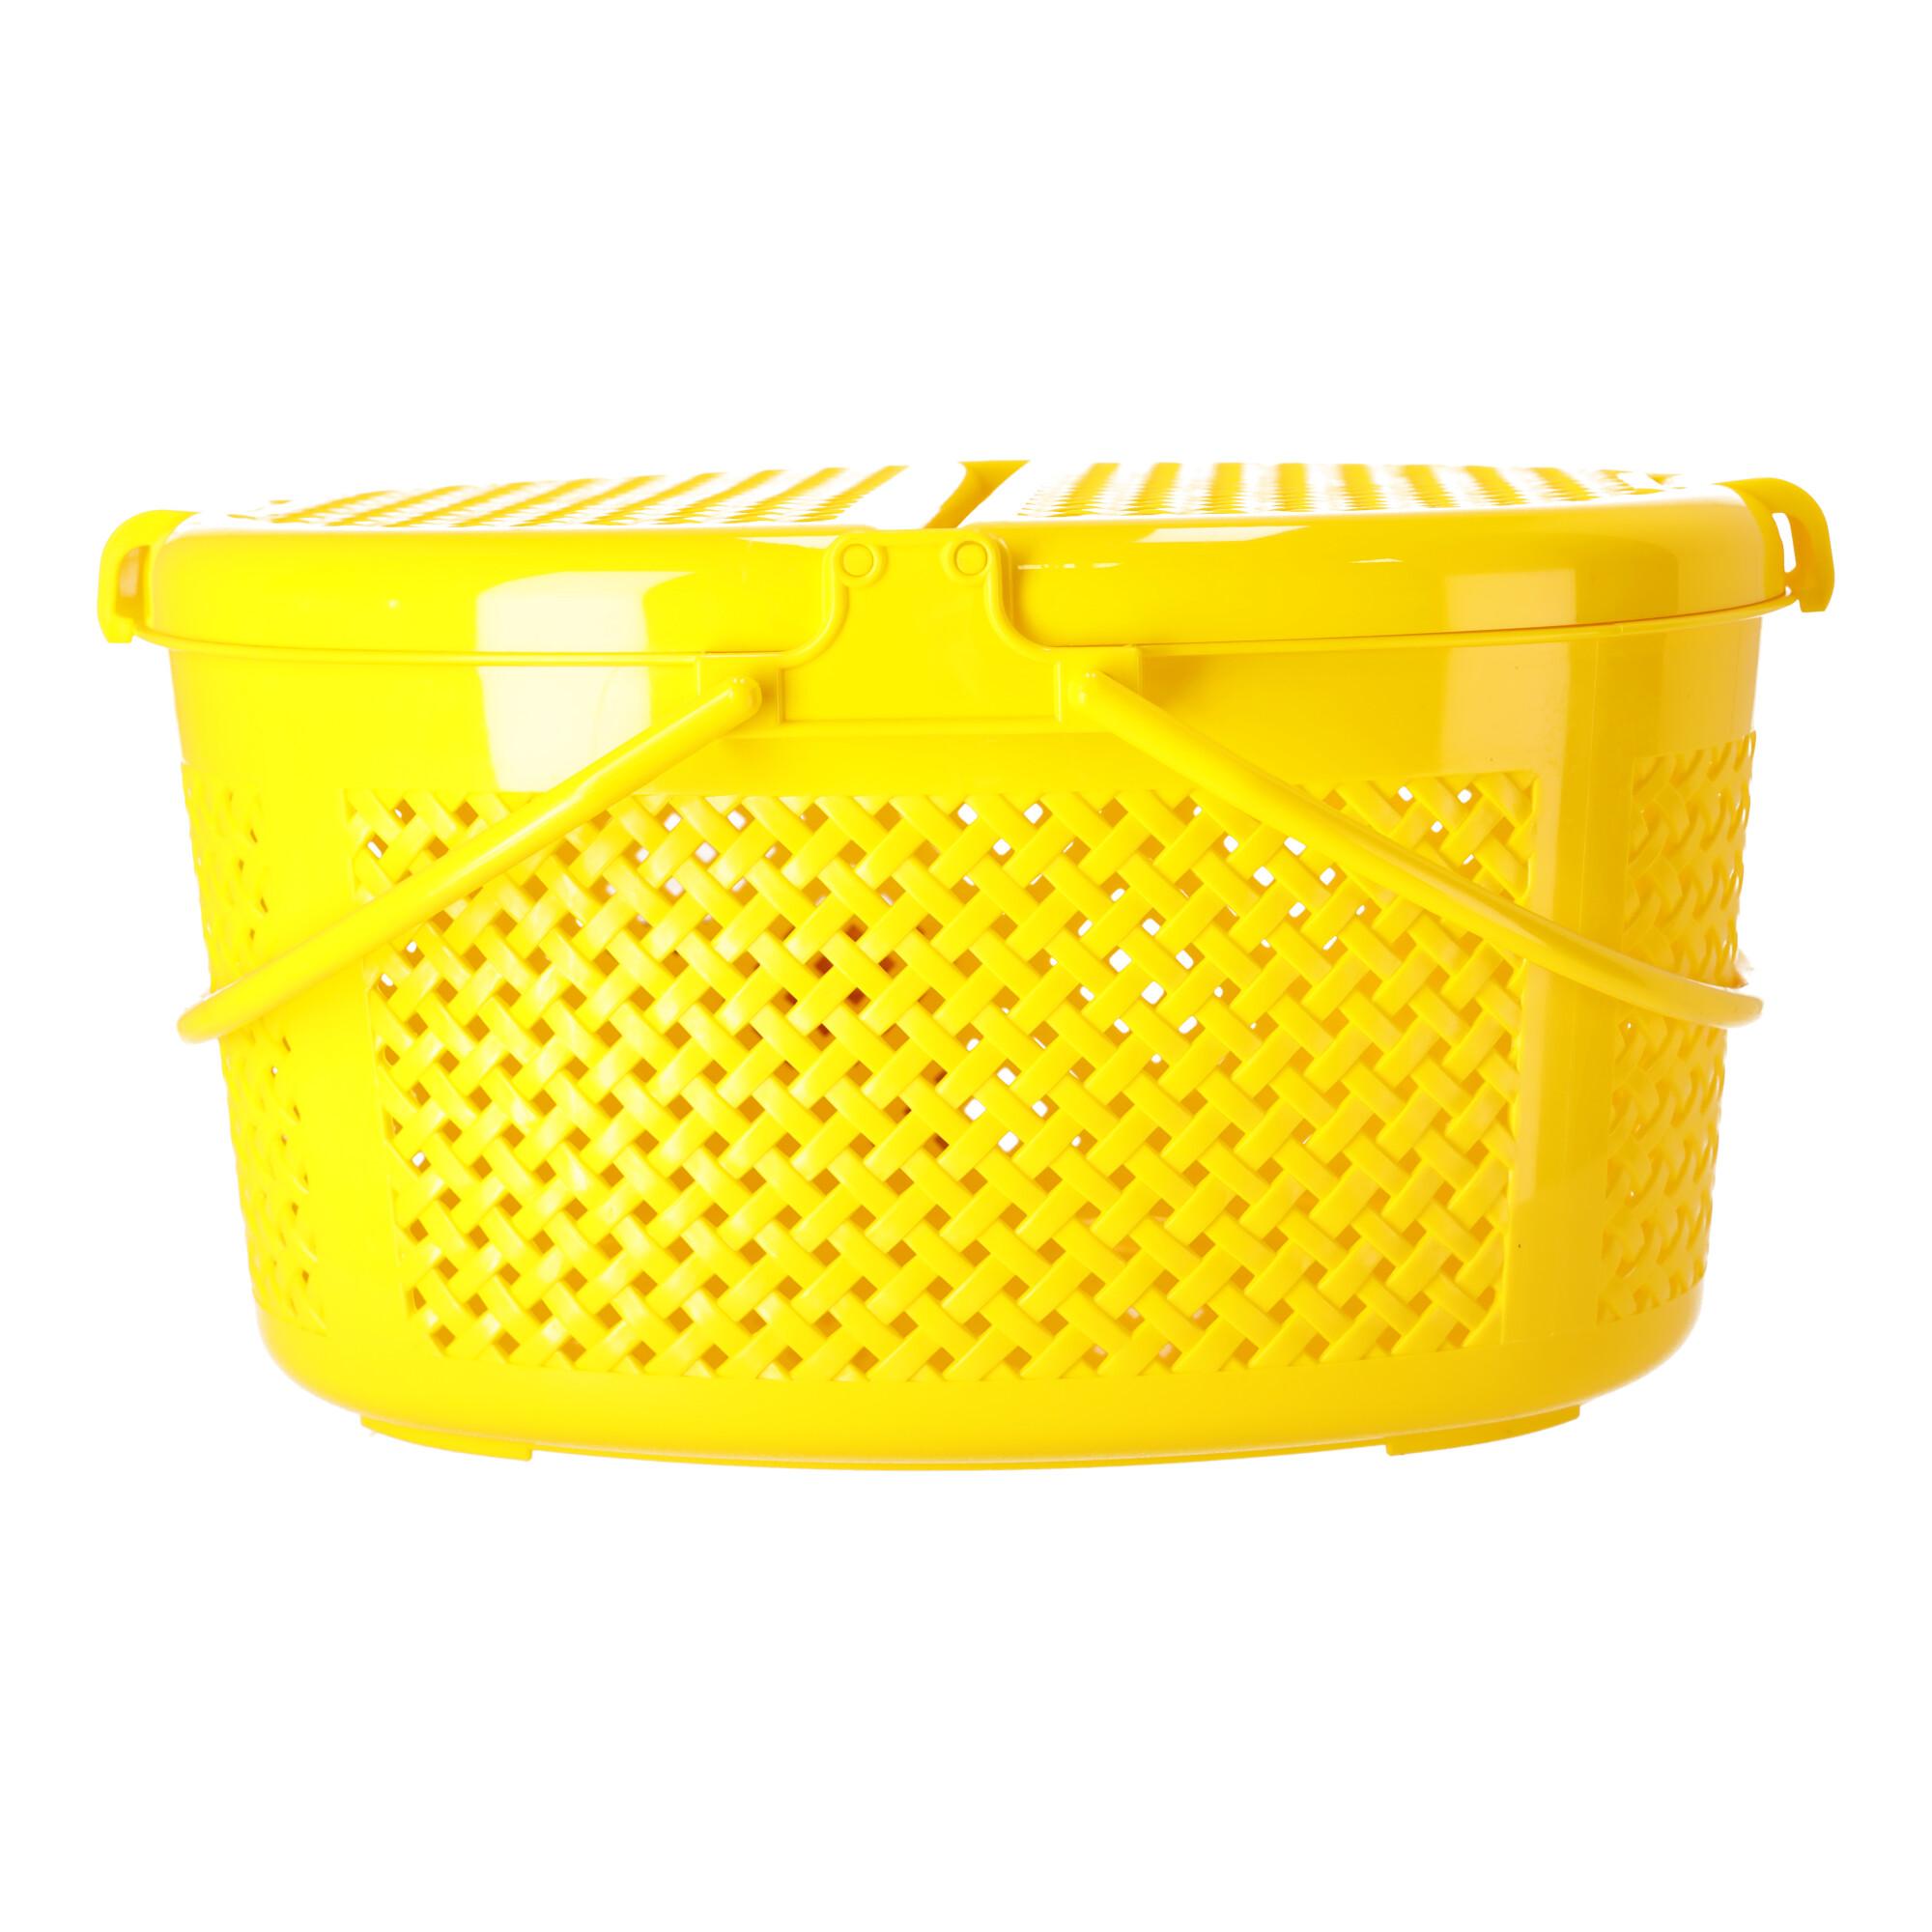 Closable oval picnic basket yellow, POLISH PRODUCT